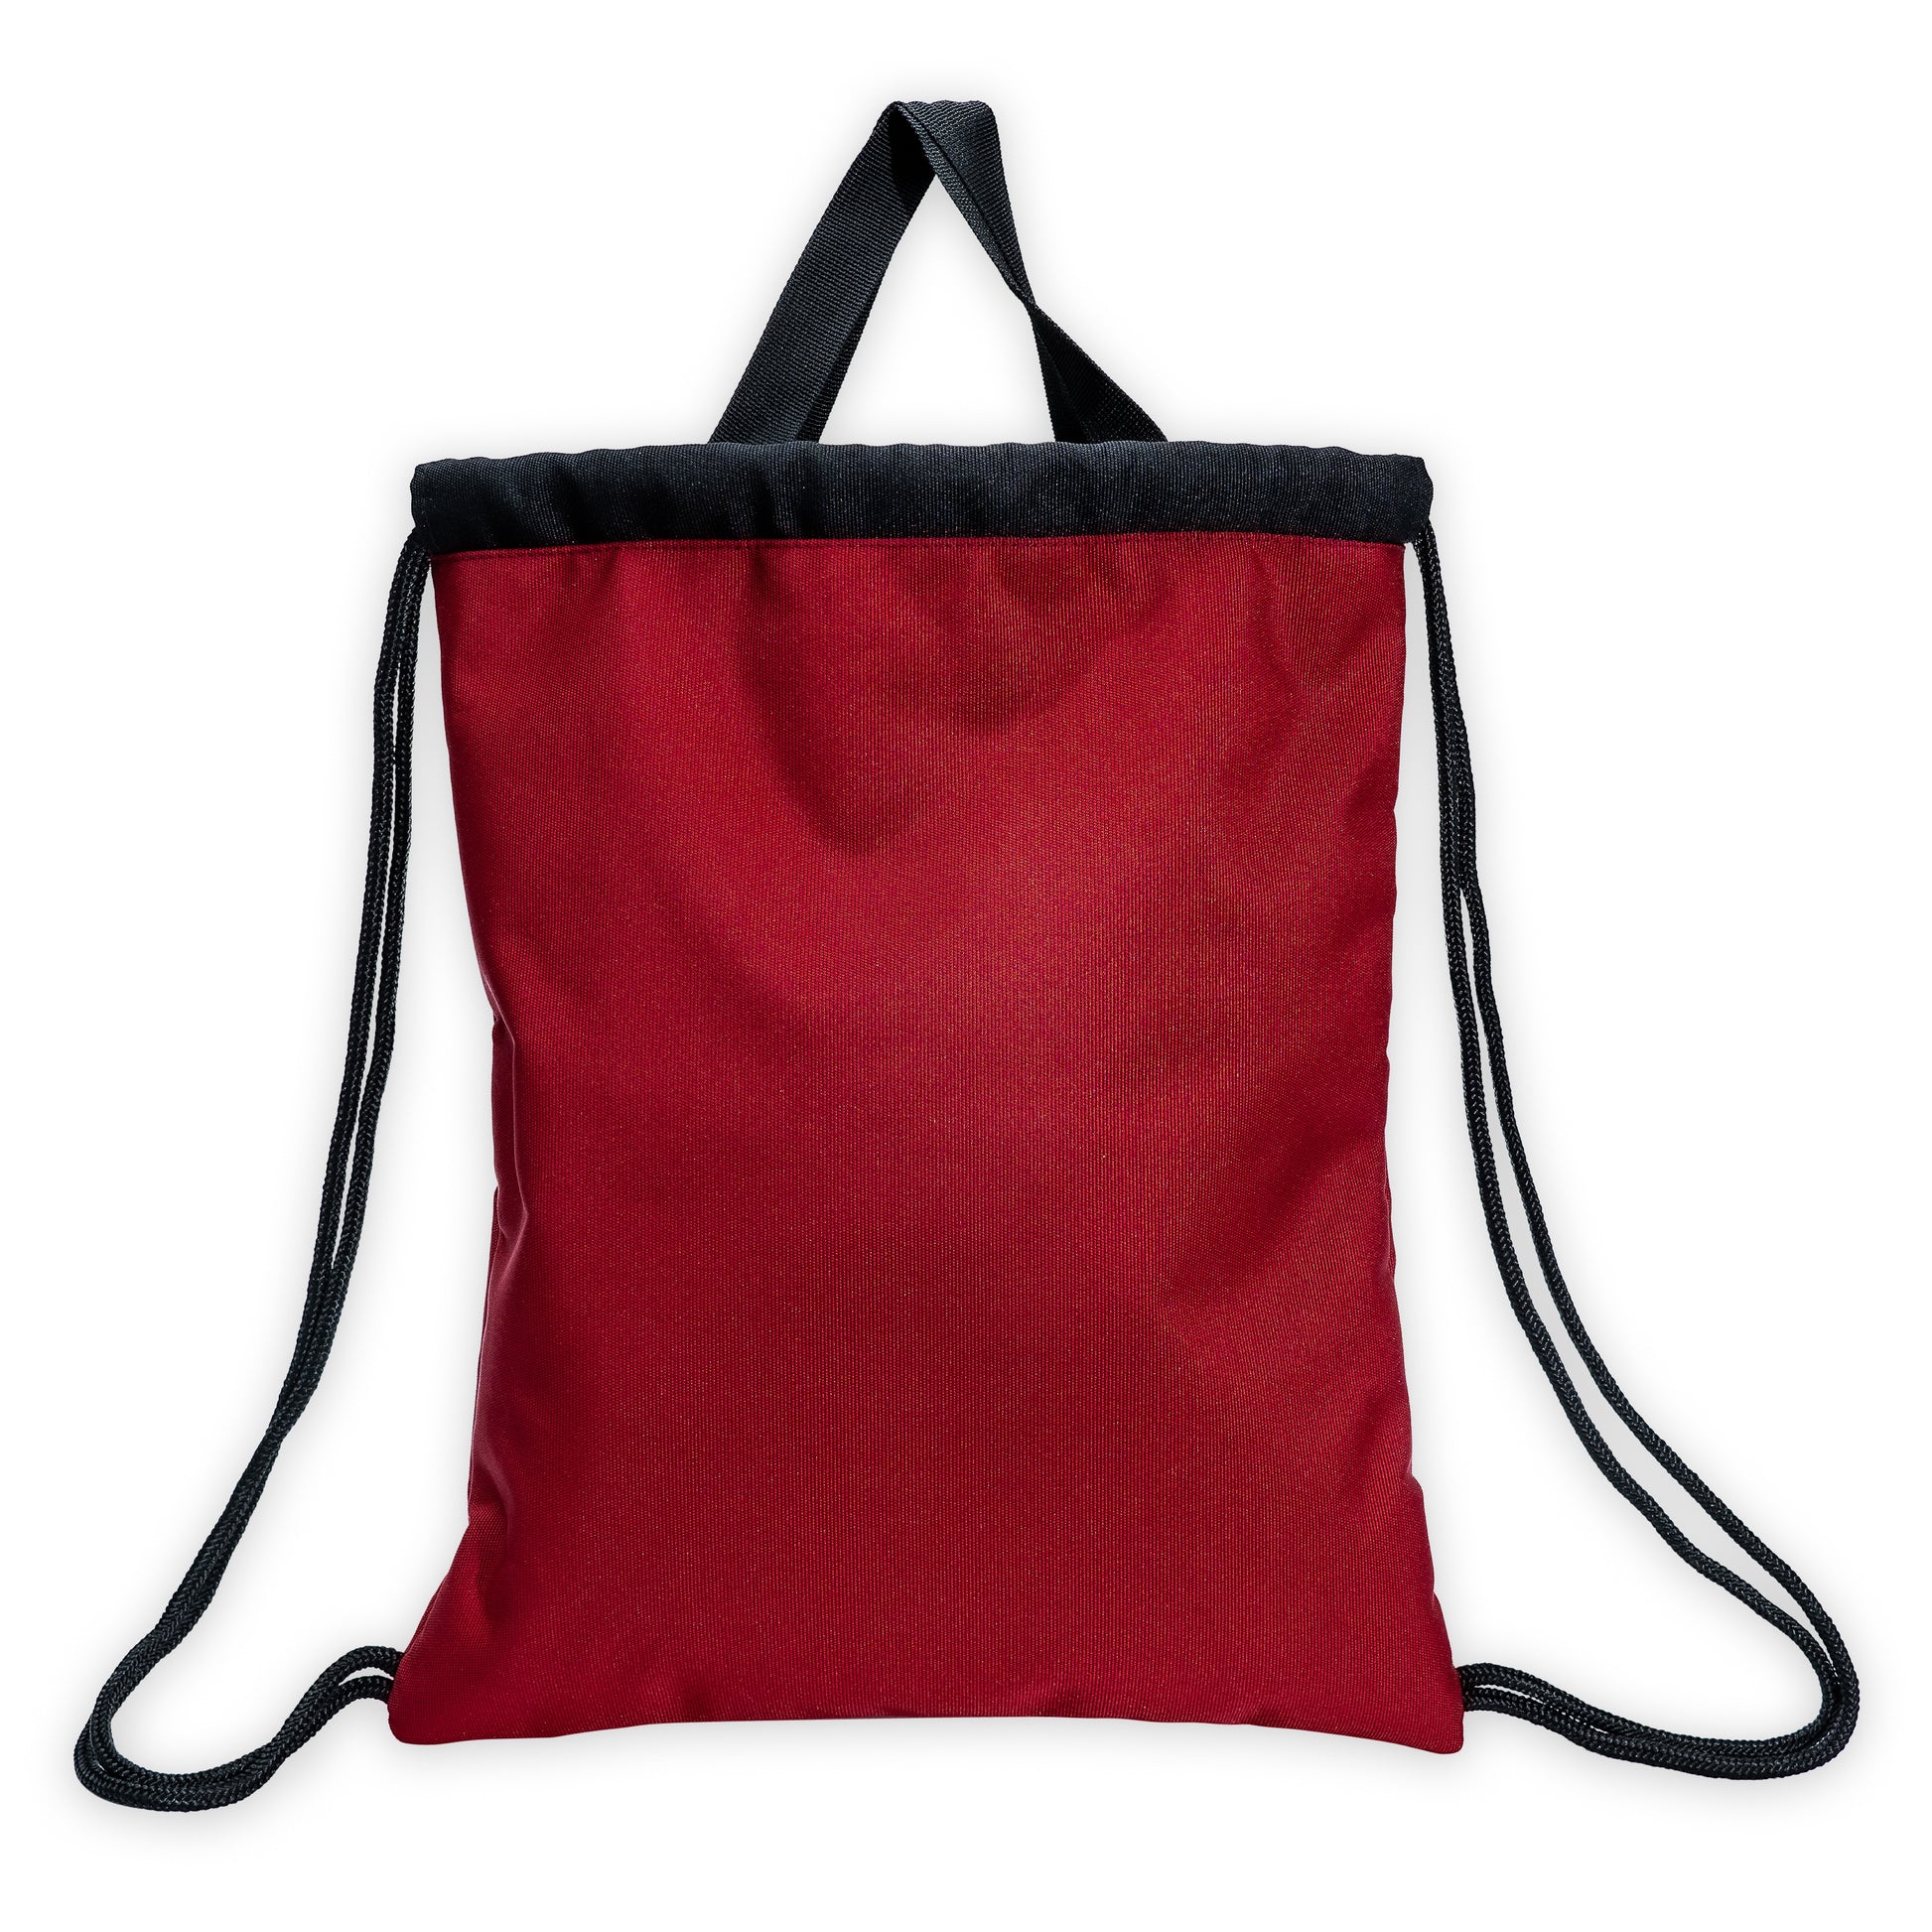 back of a red drawstring bag